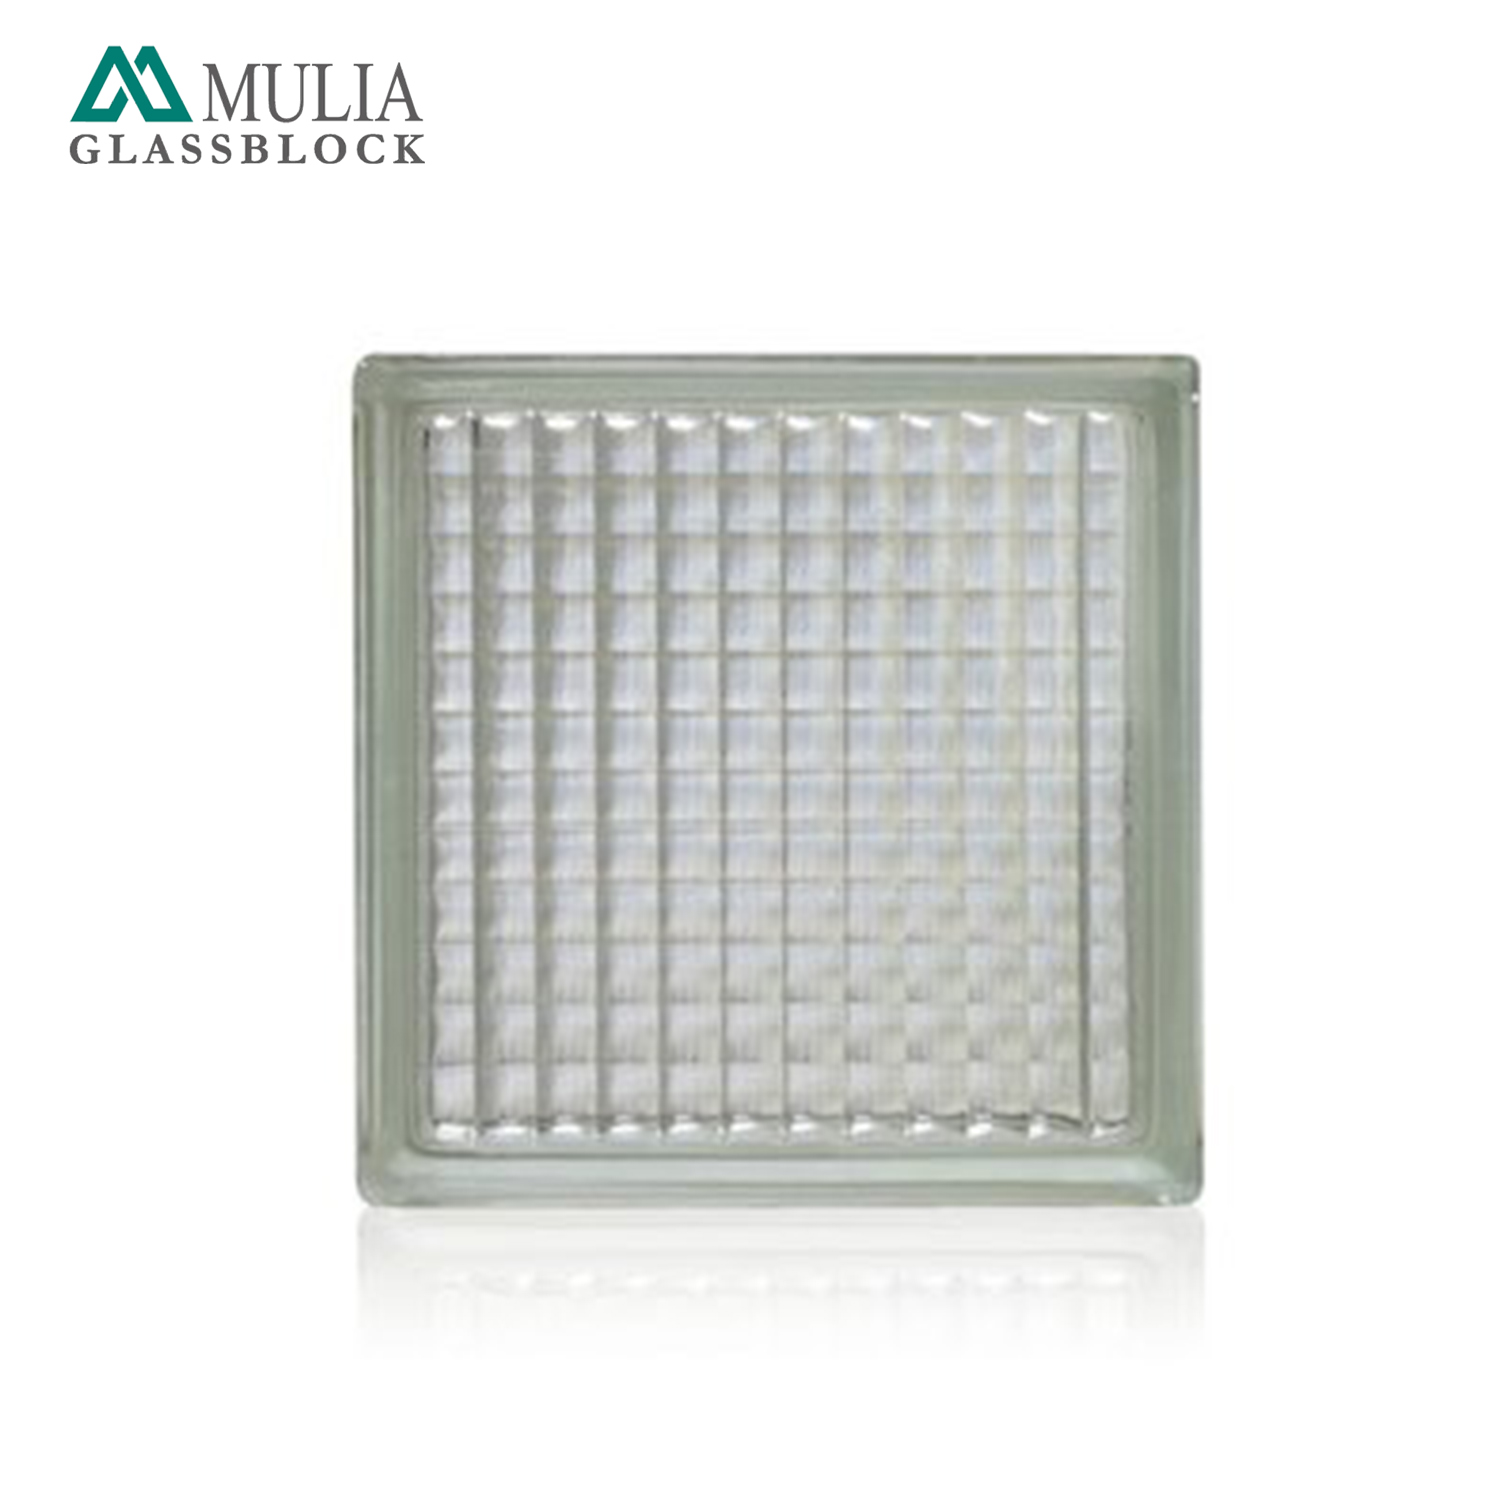 Mulia Glass Block 20X20 Quadra - Balok Kaca